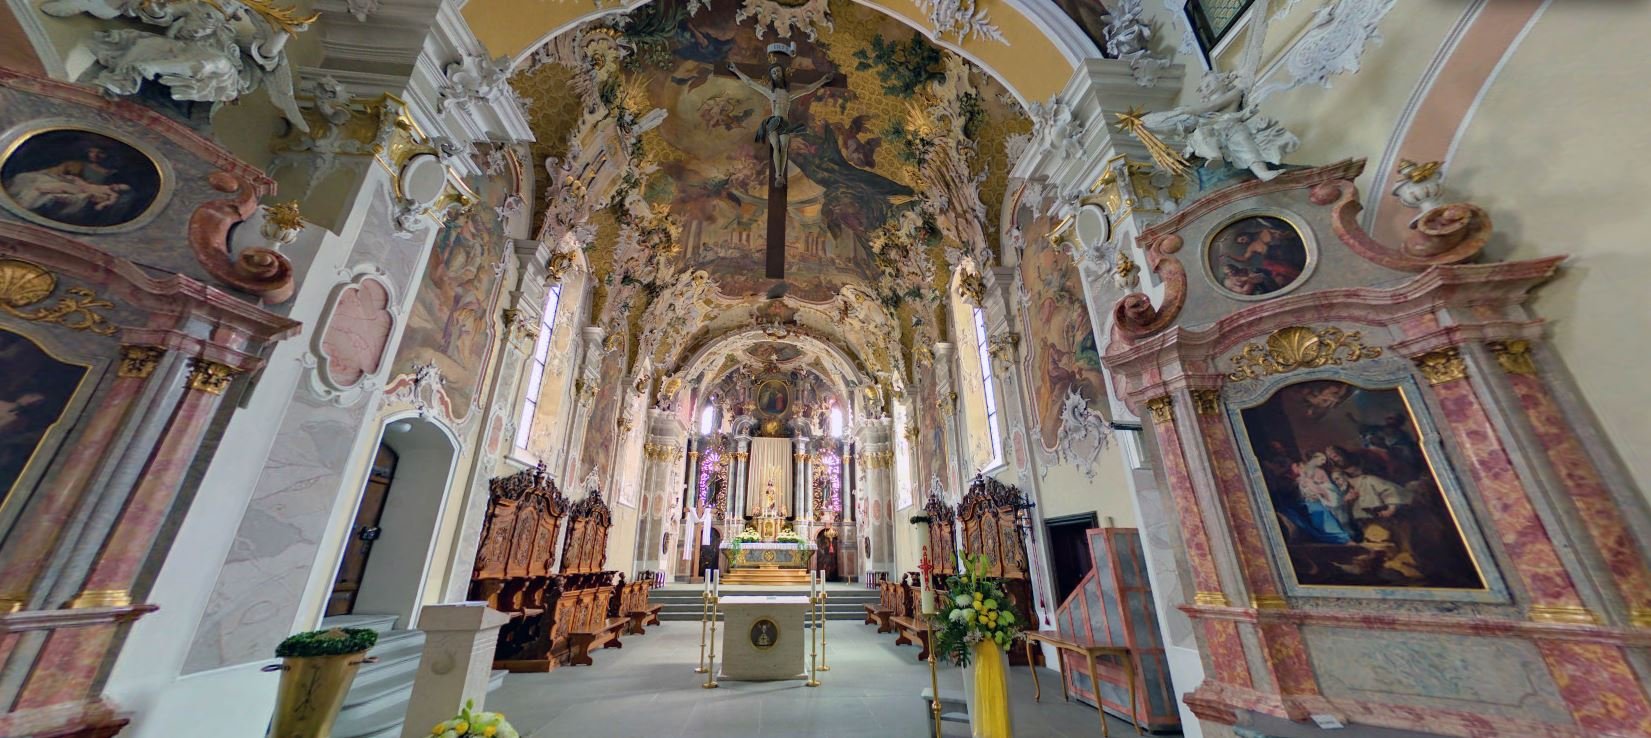 Altarraum in St. Jakobus